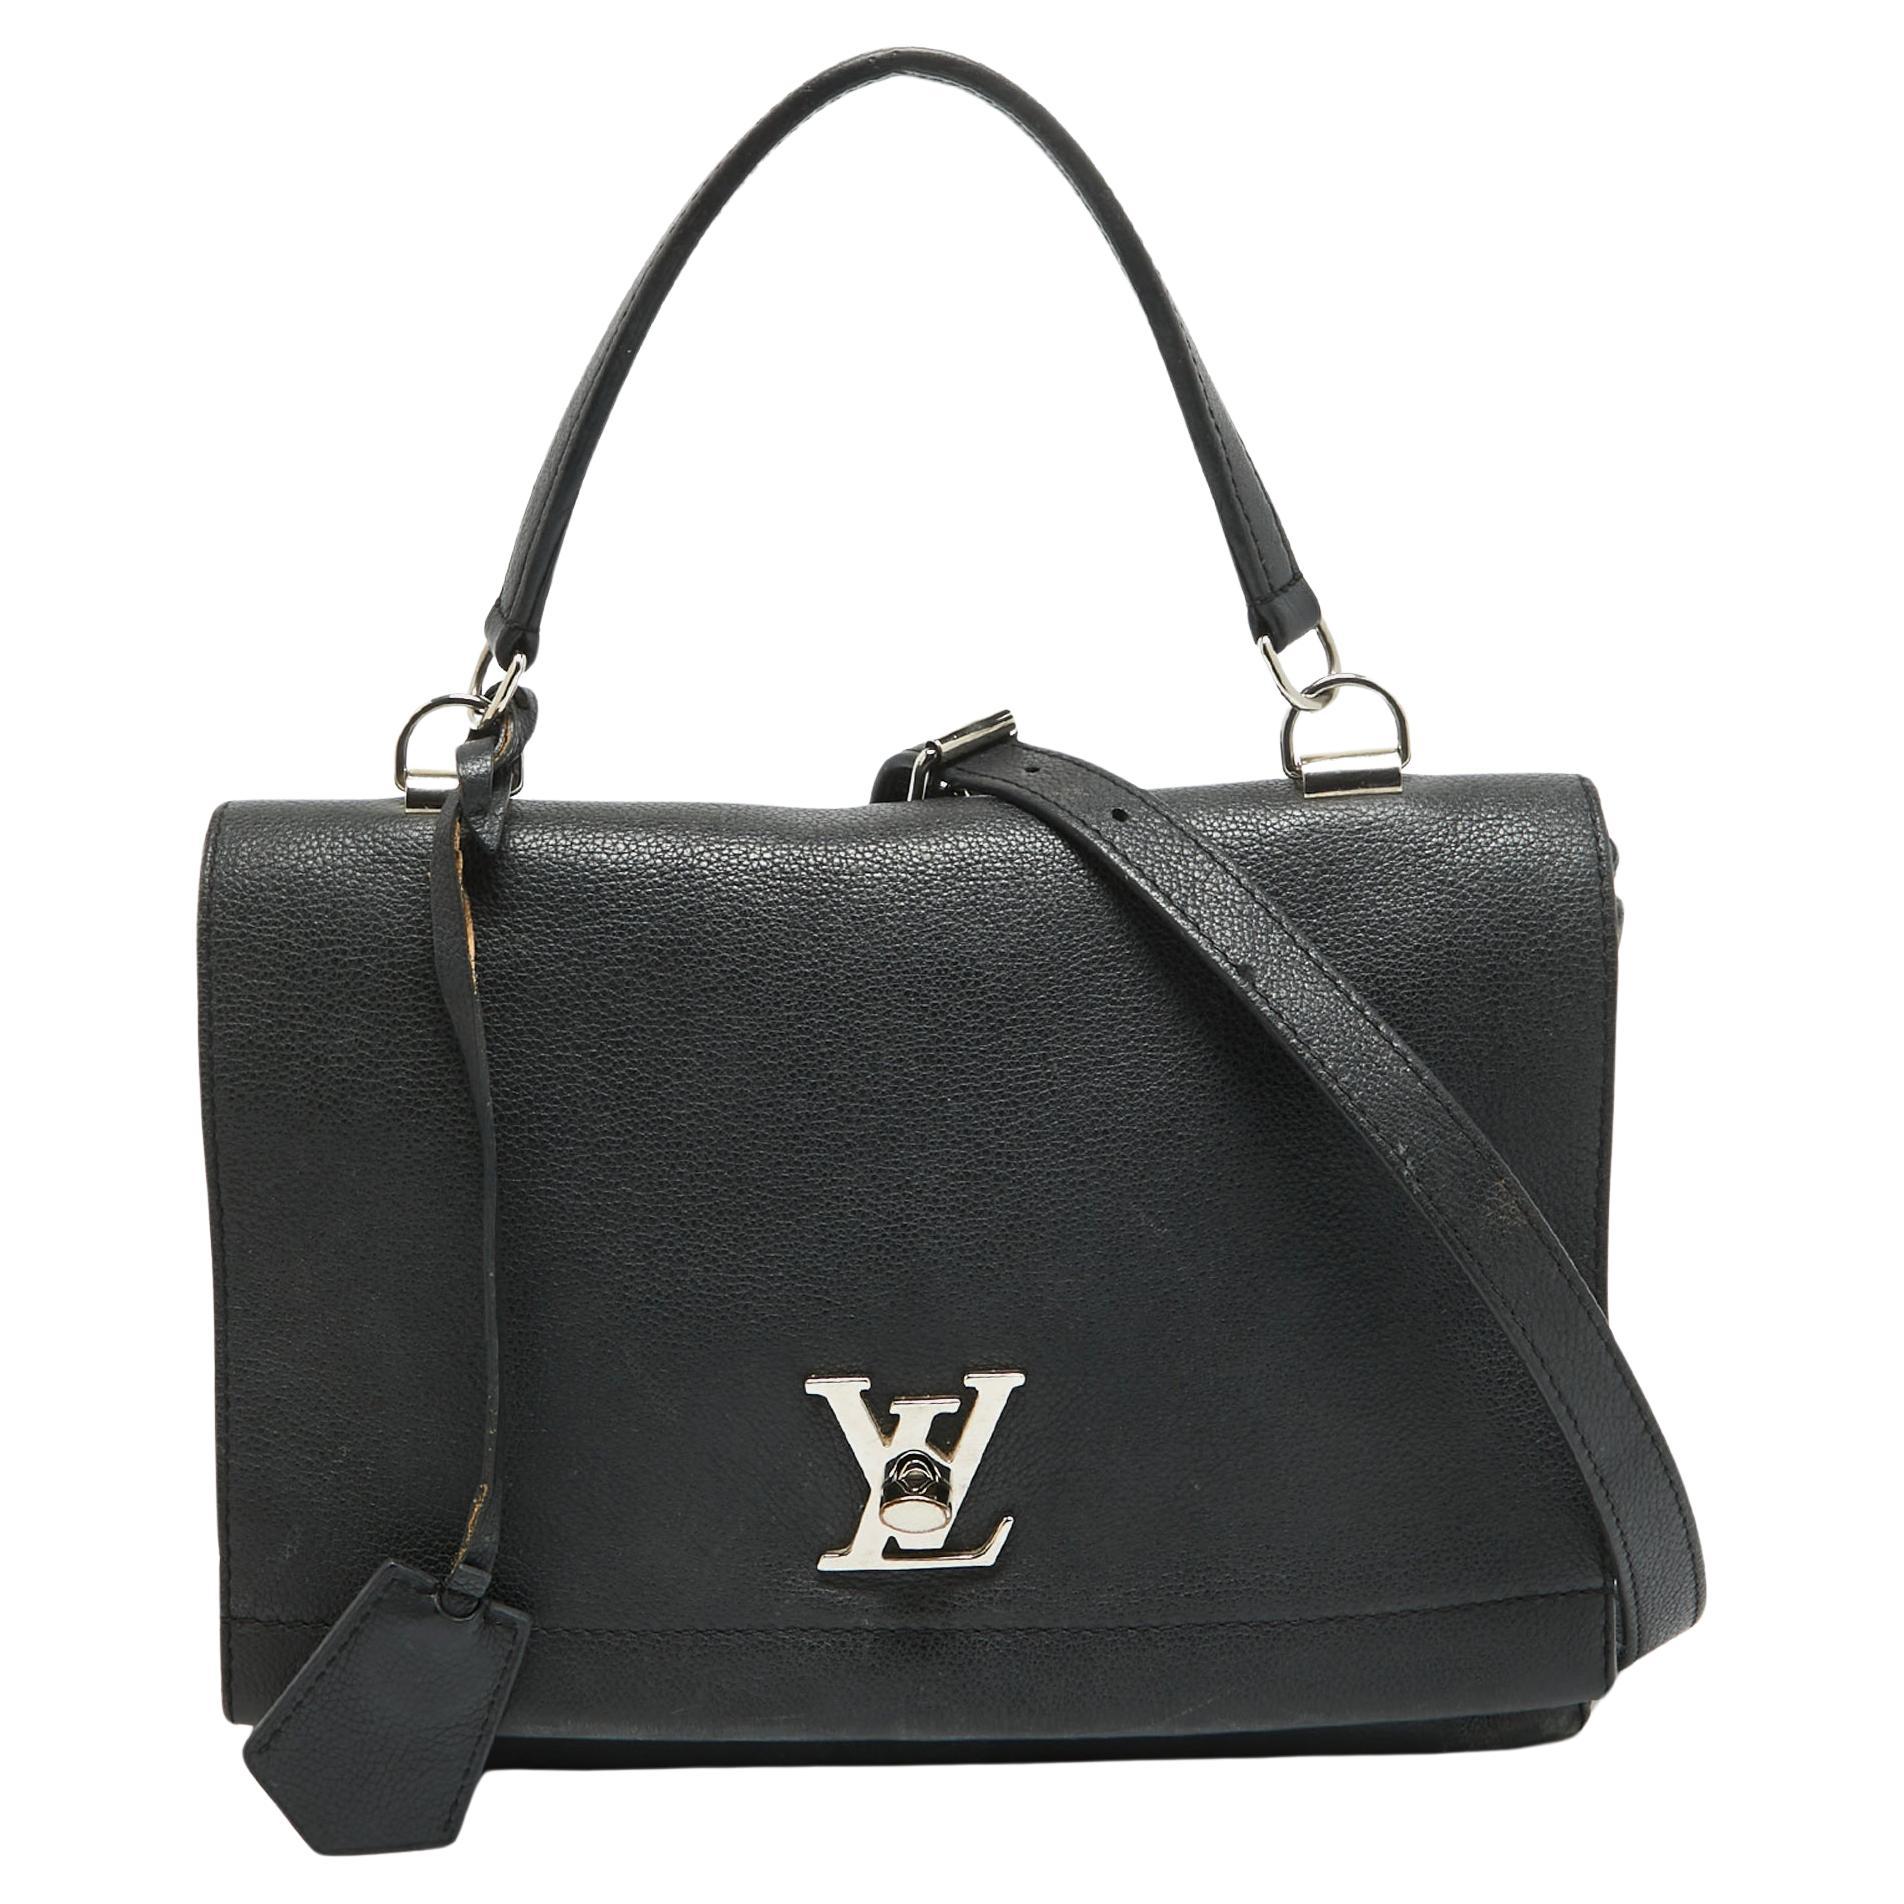 Louis Vuitton Black Leather Lockme II Bag For Sale